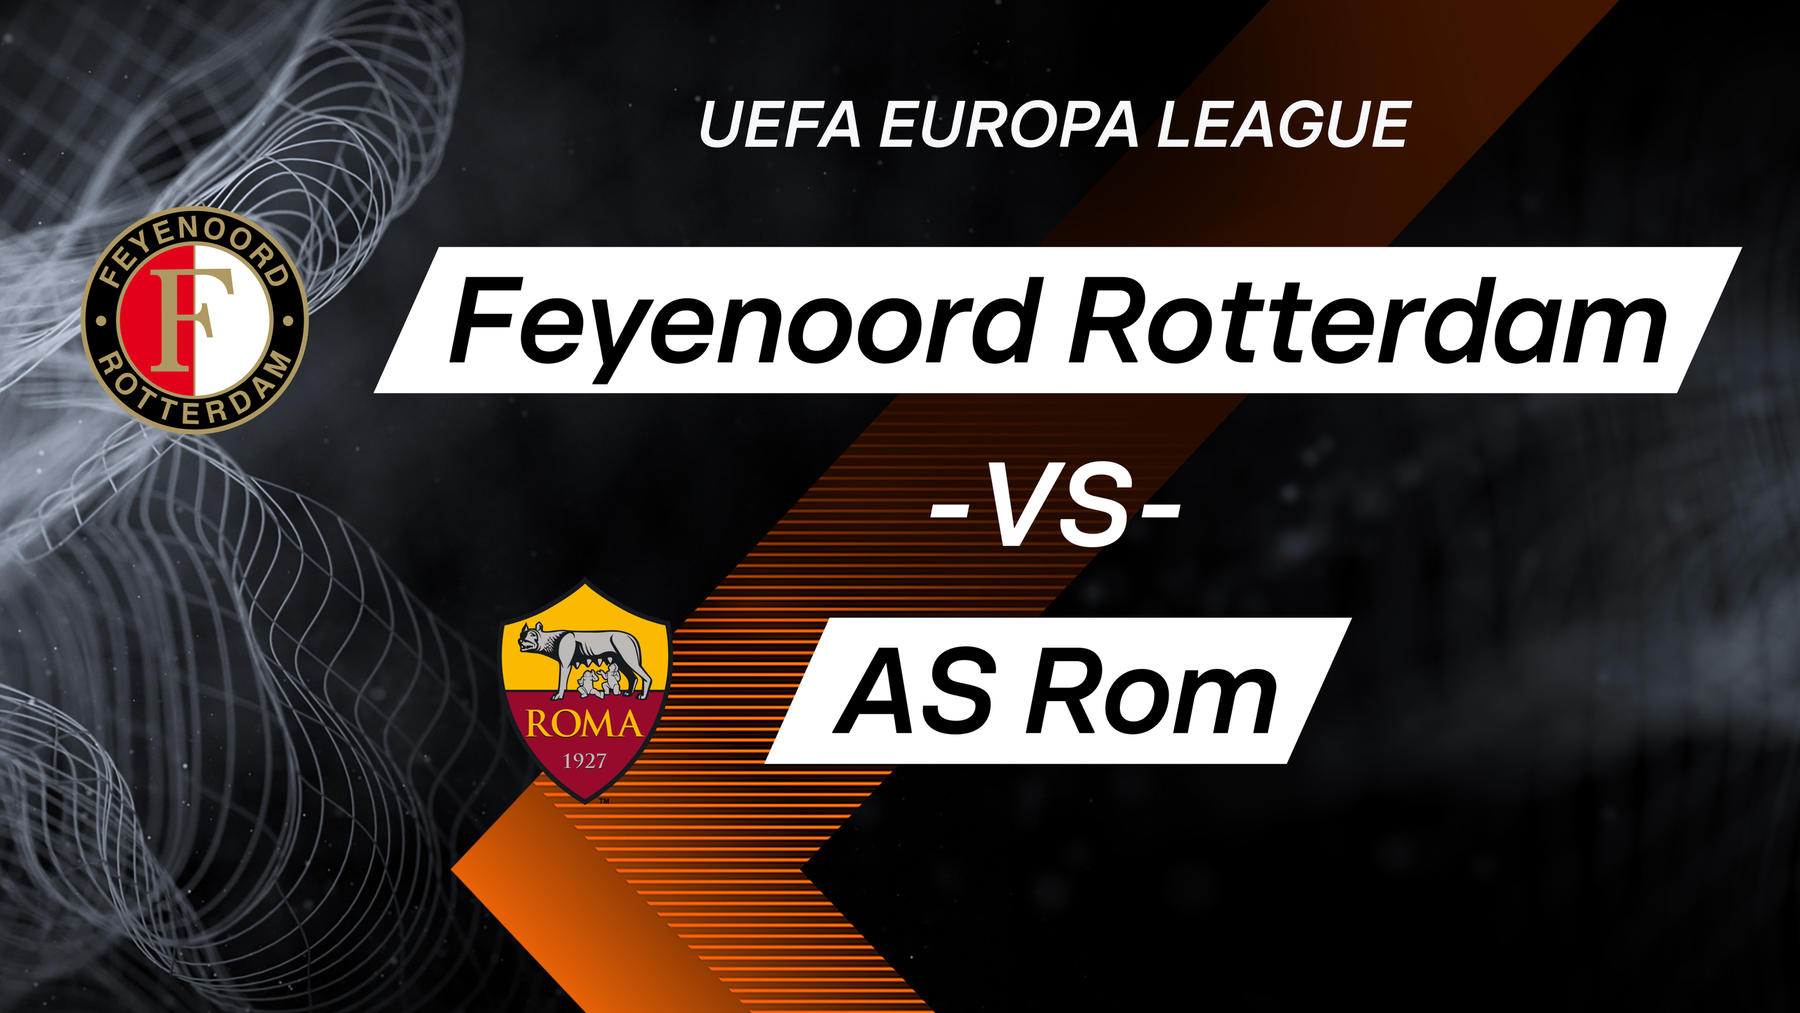 Feyenoord Rotterdam vs. AS Rom